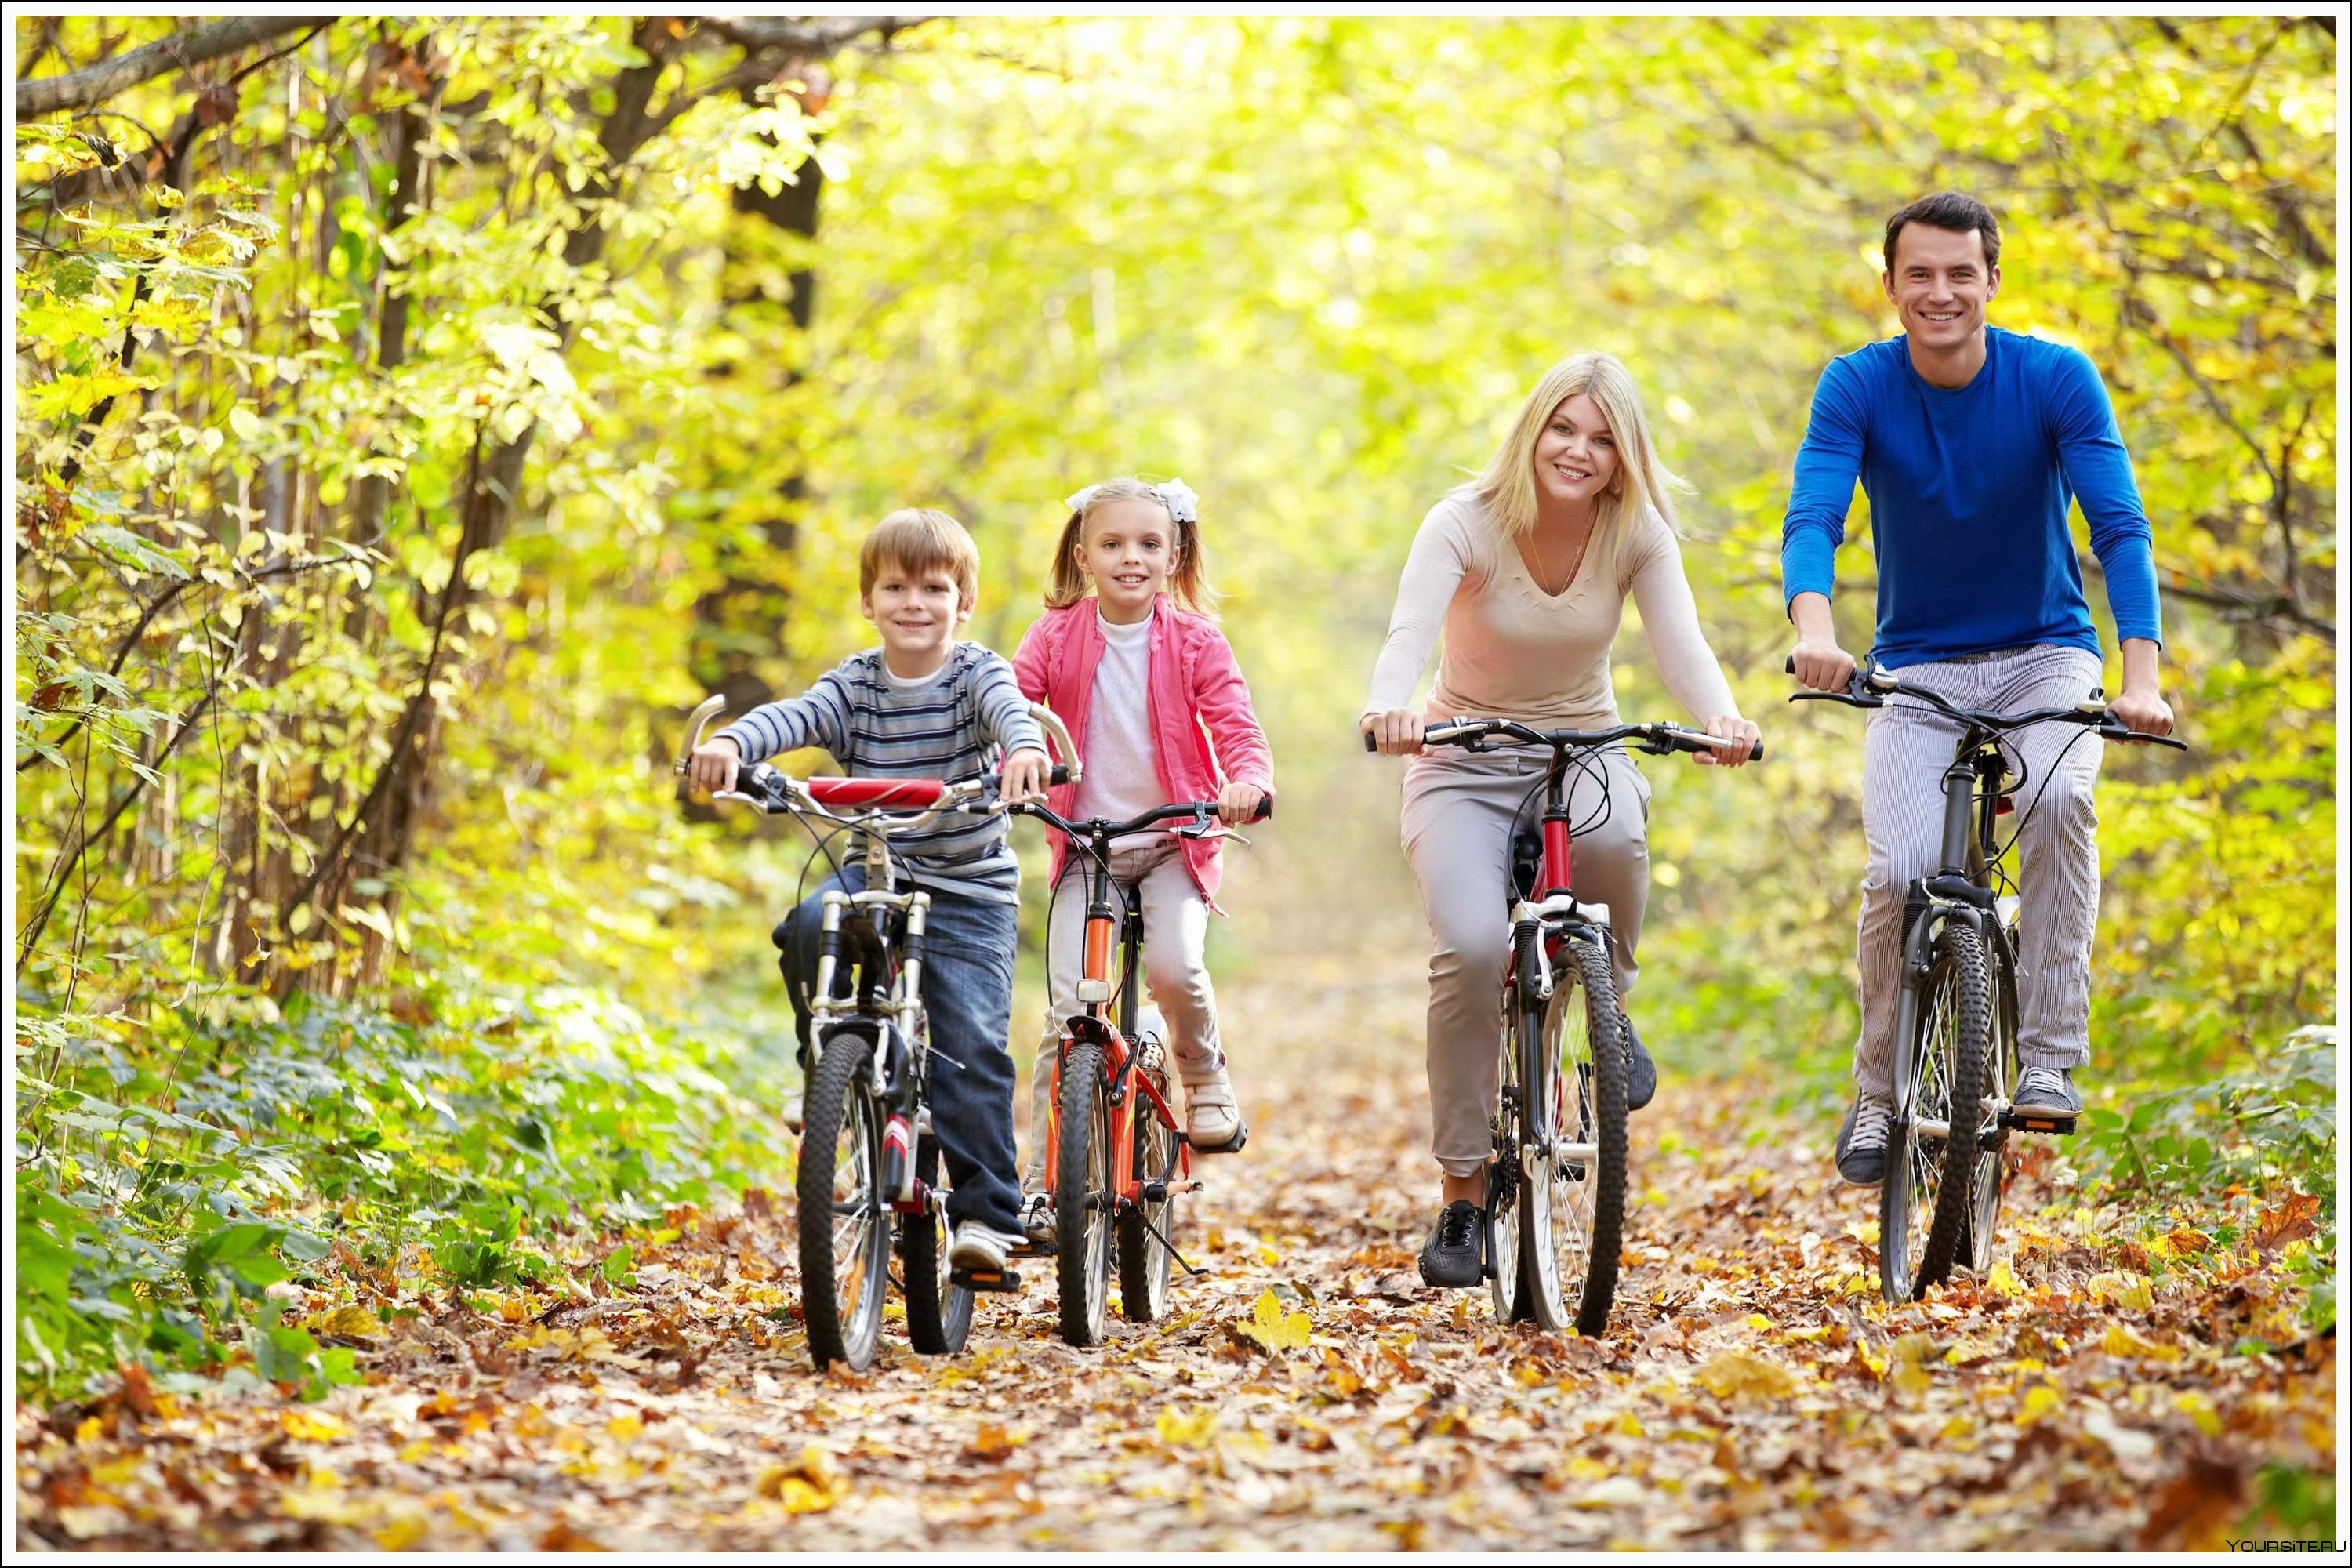 Едим на свежем воздухе. Прогулки на свежем воздухе. Семья на прогулке. Прогулка на природе. Семья на велосипедах.